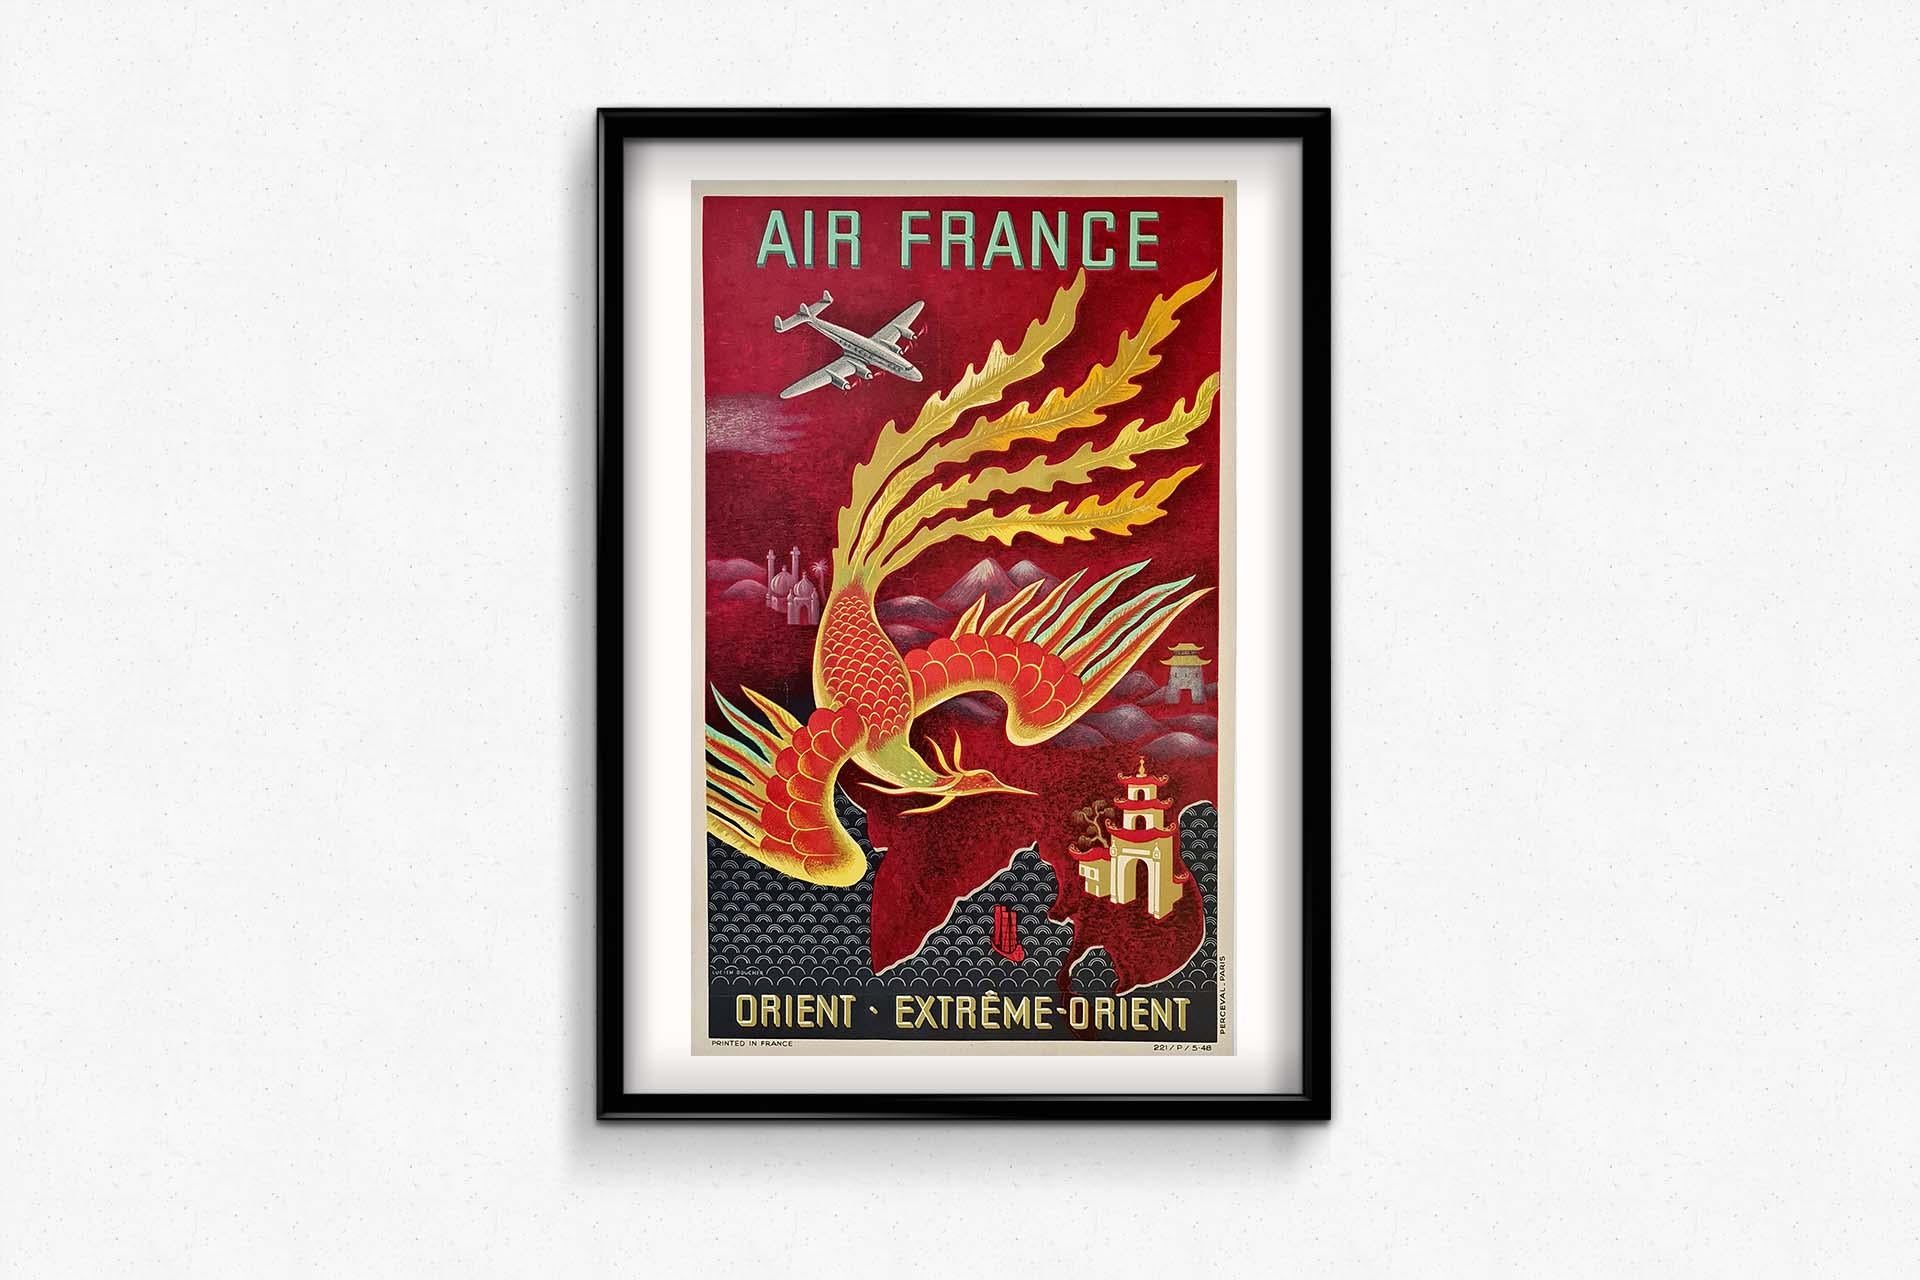 Original Poster by Lucien Boucher in 1948 - Air France - Orient - Extrême Orient 1